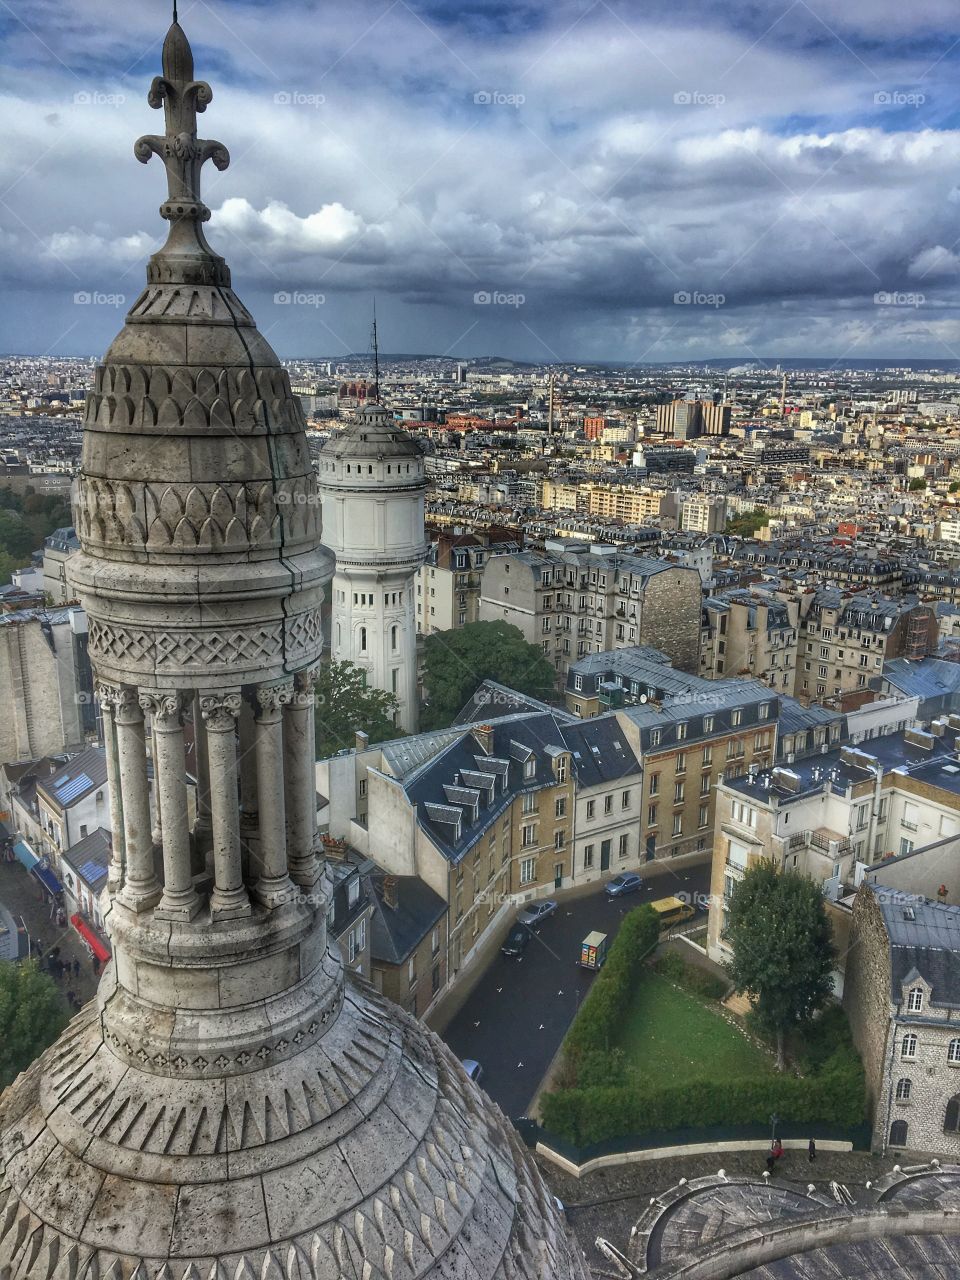 Paris as seen from Sacre Coeur Basilica, Montmartre, France